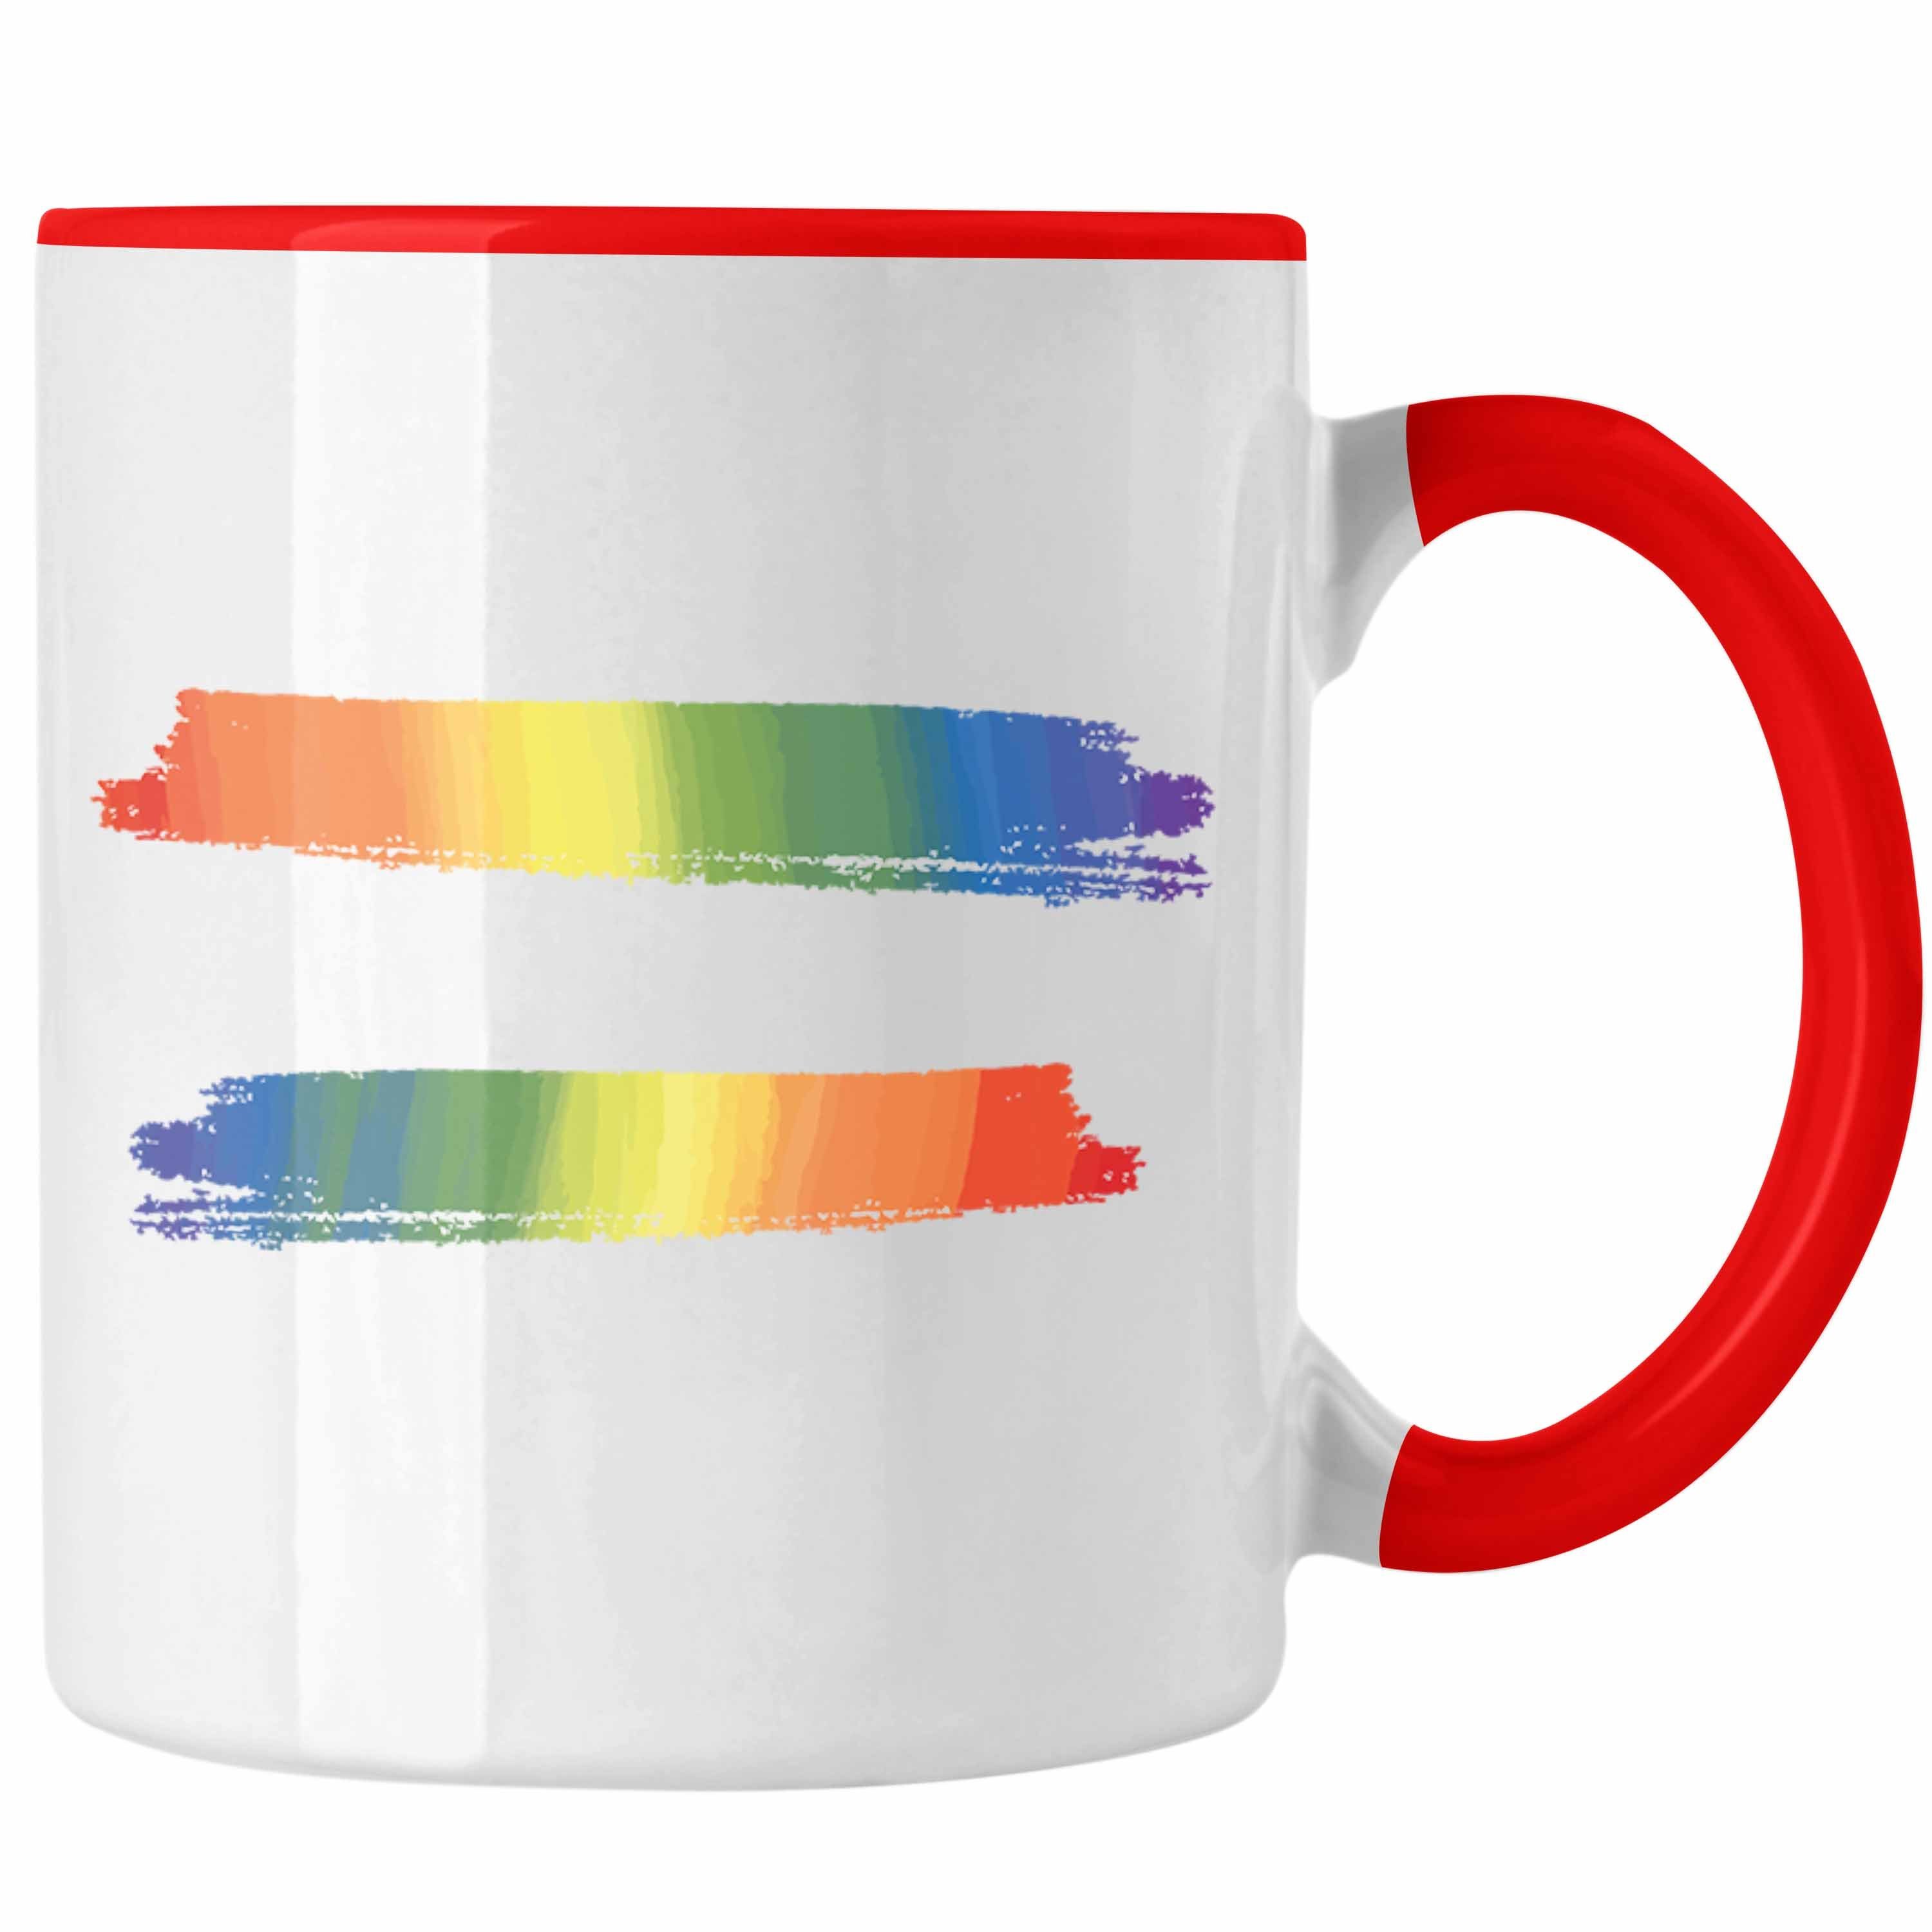 Trendation Tasse Trendation - Regenbogen Tasse Geschenk LGBT Schwule Lesben Transgender Grafik Pride Rot